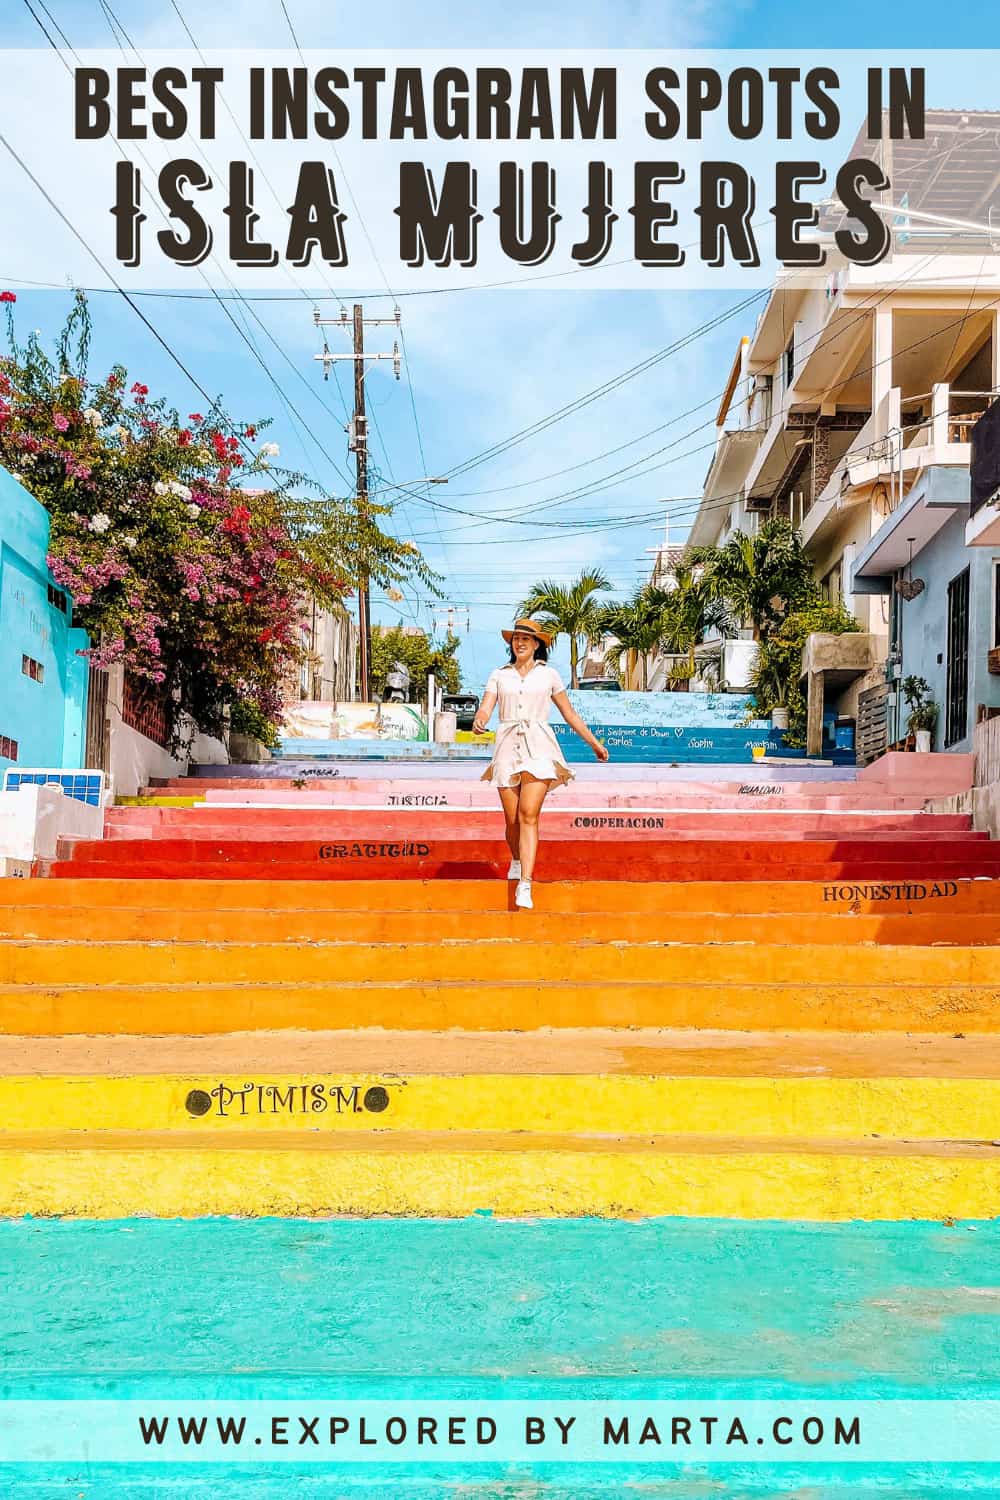 Ultimate best Instagram spots in Isla Mujeres in Mexico